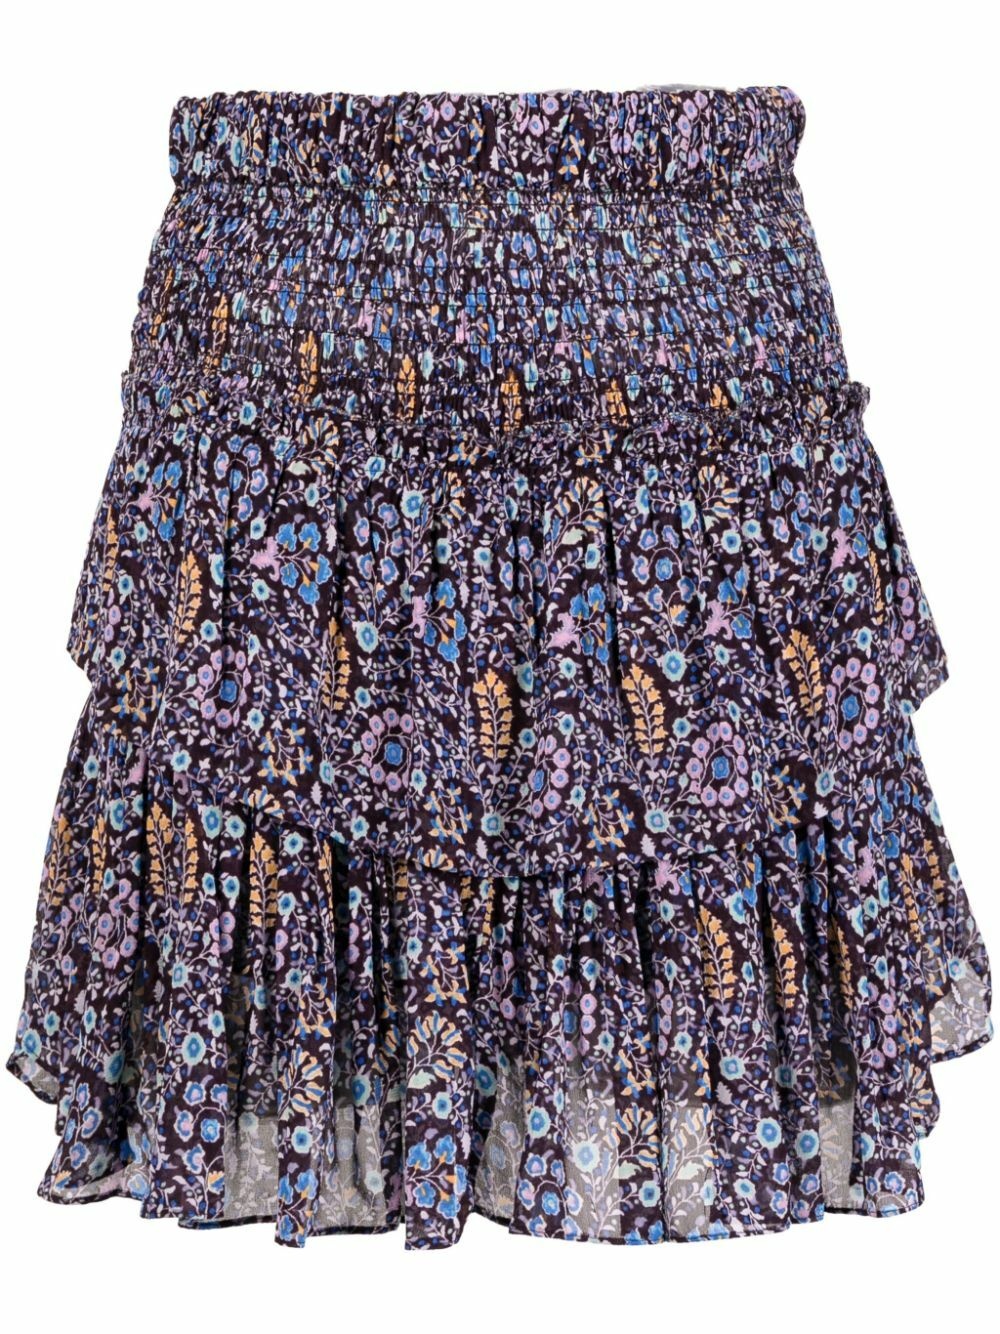 Photo: MARANT ETOILE - Hilari Printed Skirt